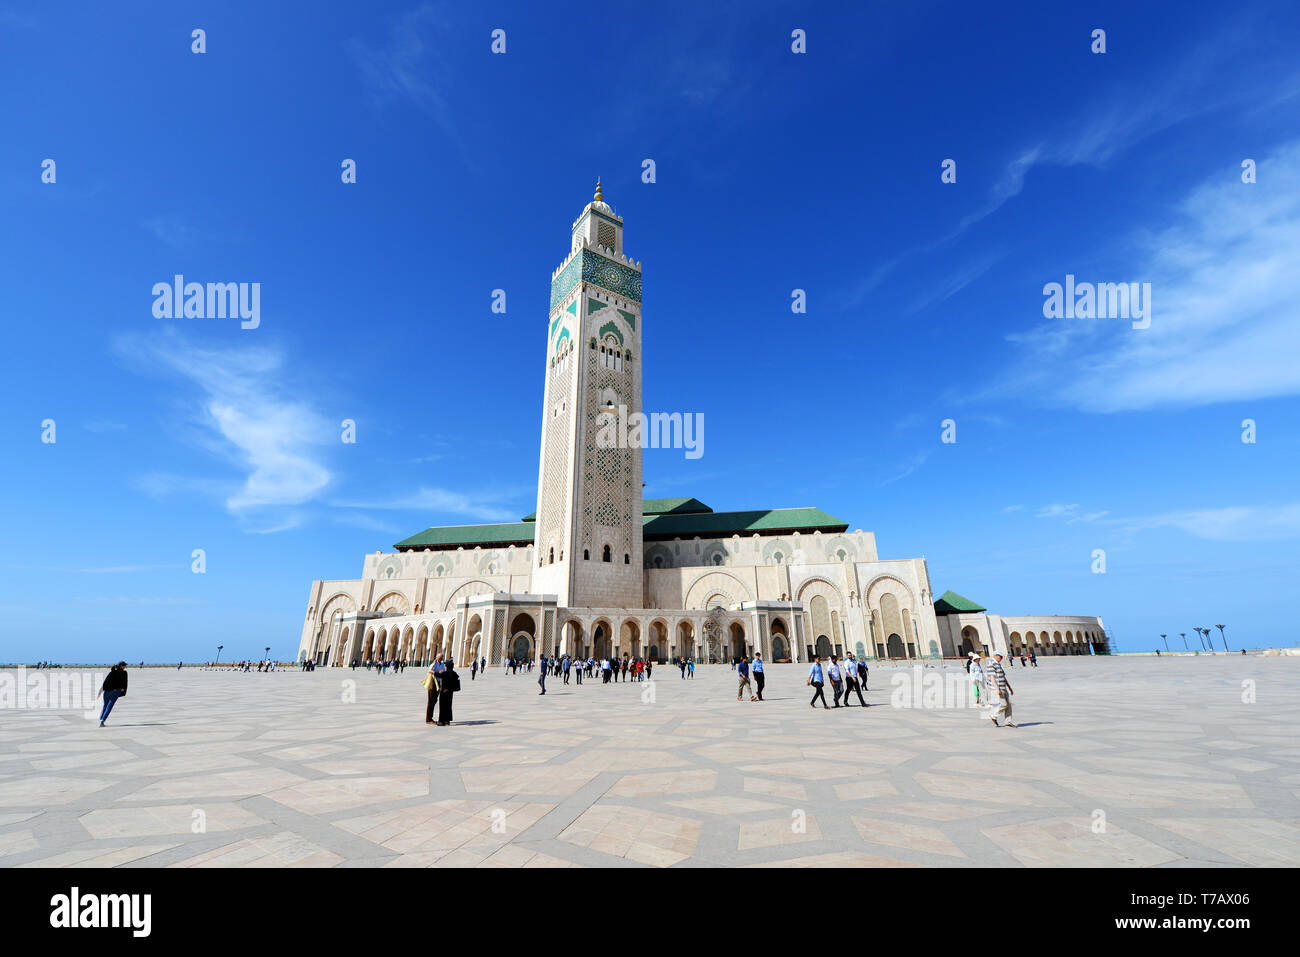 The Hassan II mosque in Casablanca, Morocco. Stock Photo